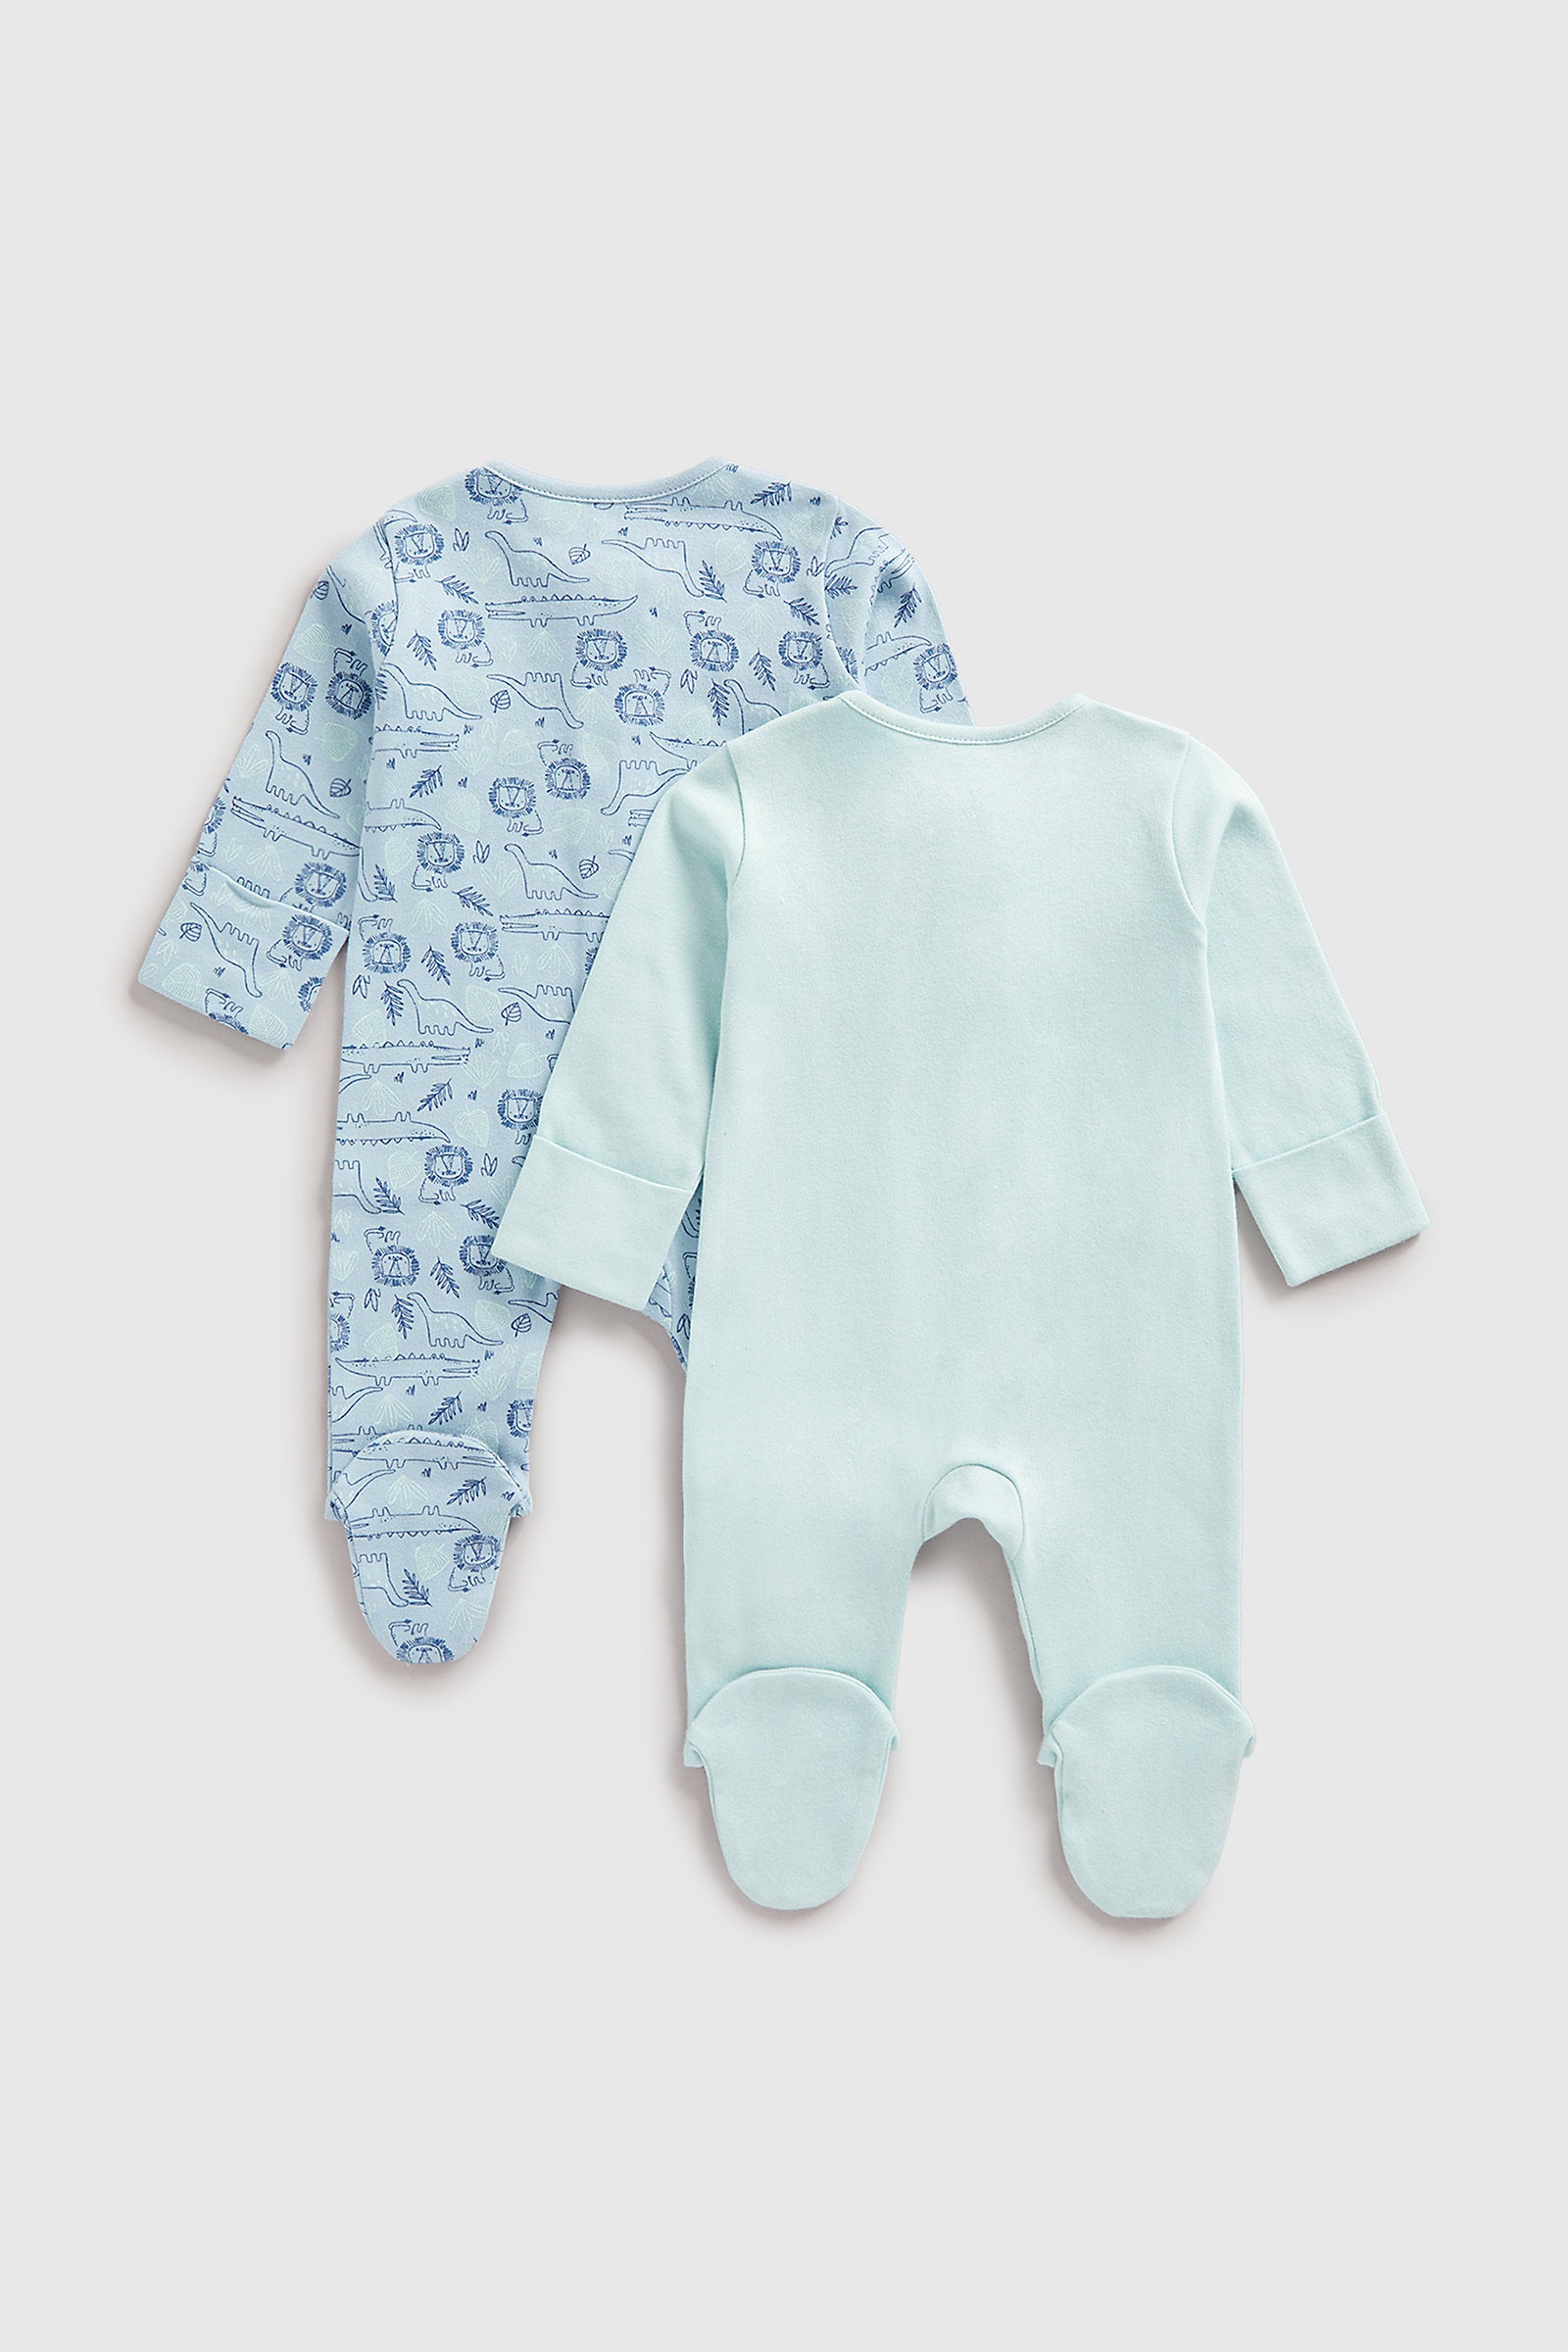 Mothercare Safari Zip-Up Baby Sleepsuits - 2 Pack